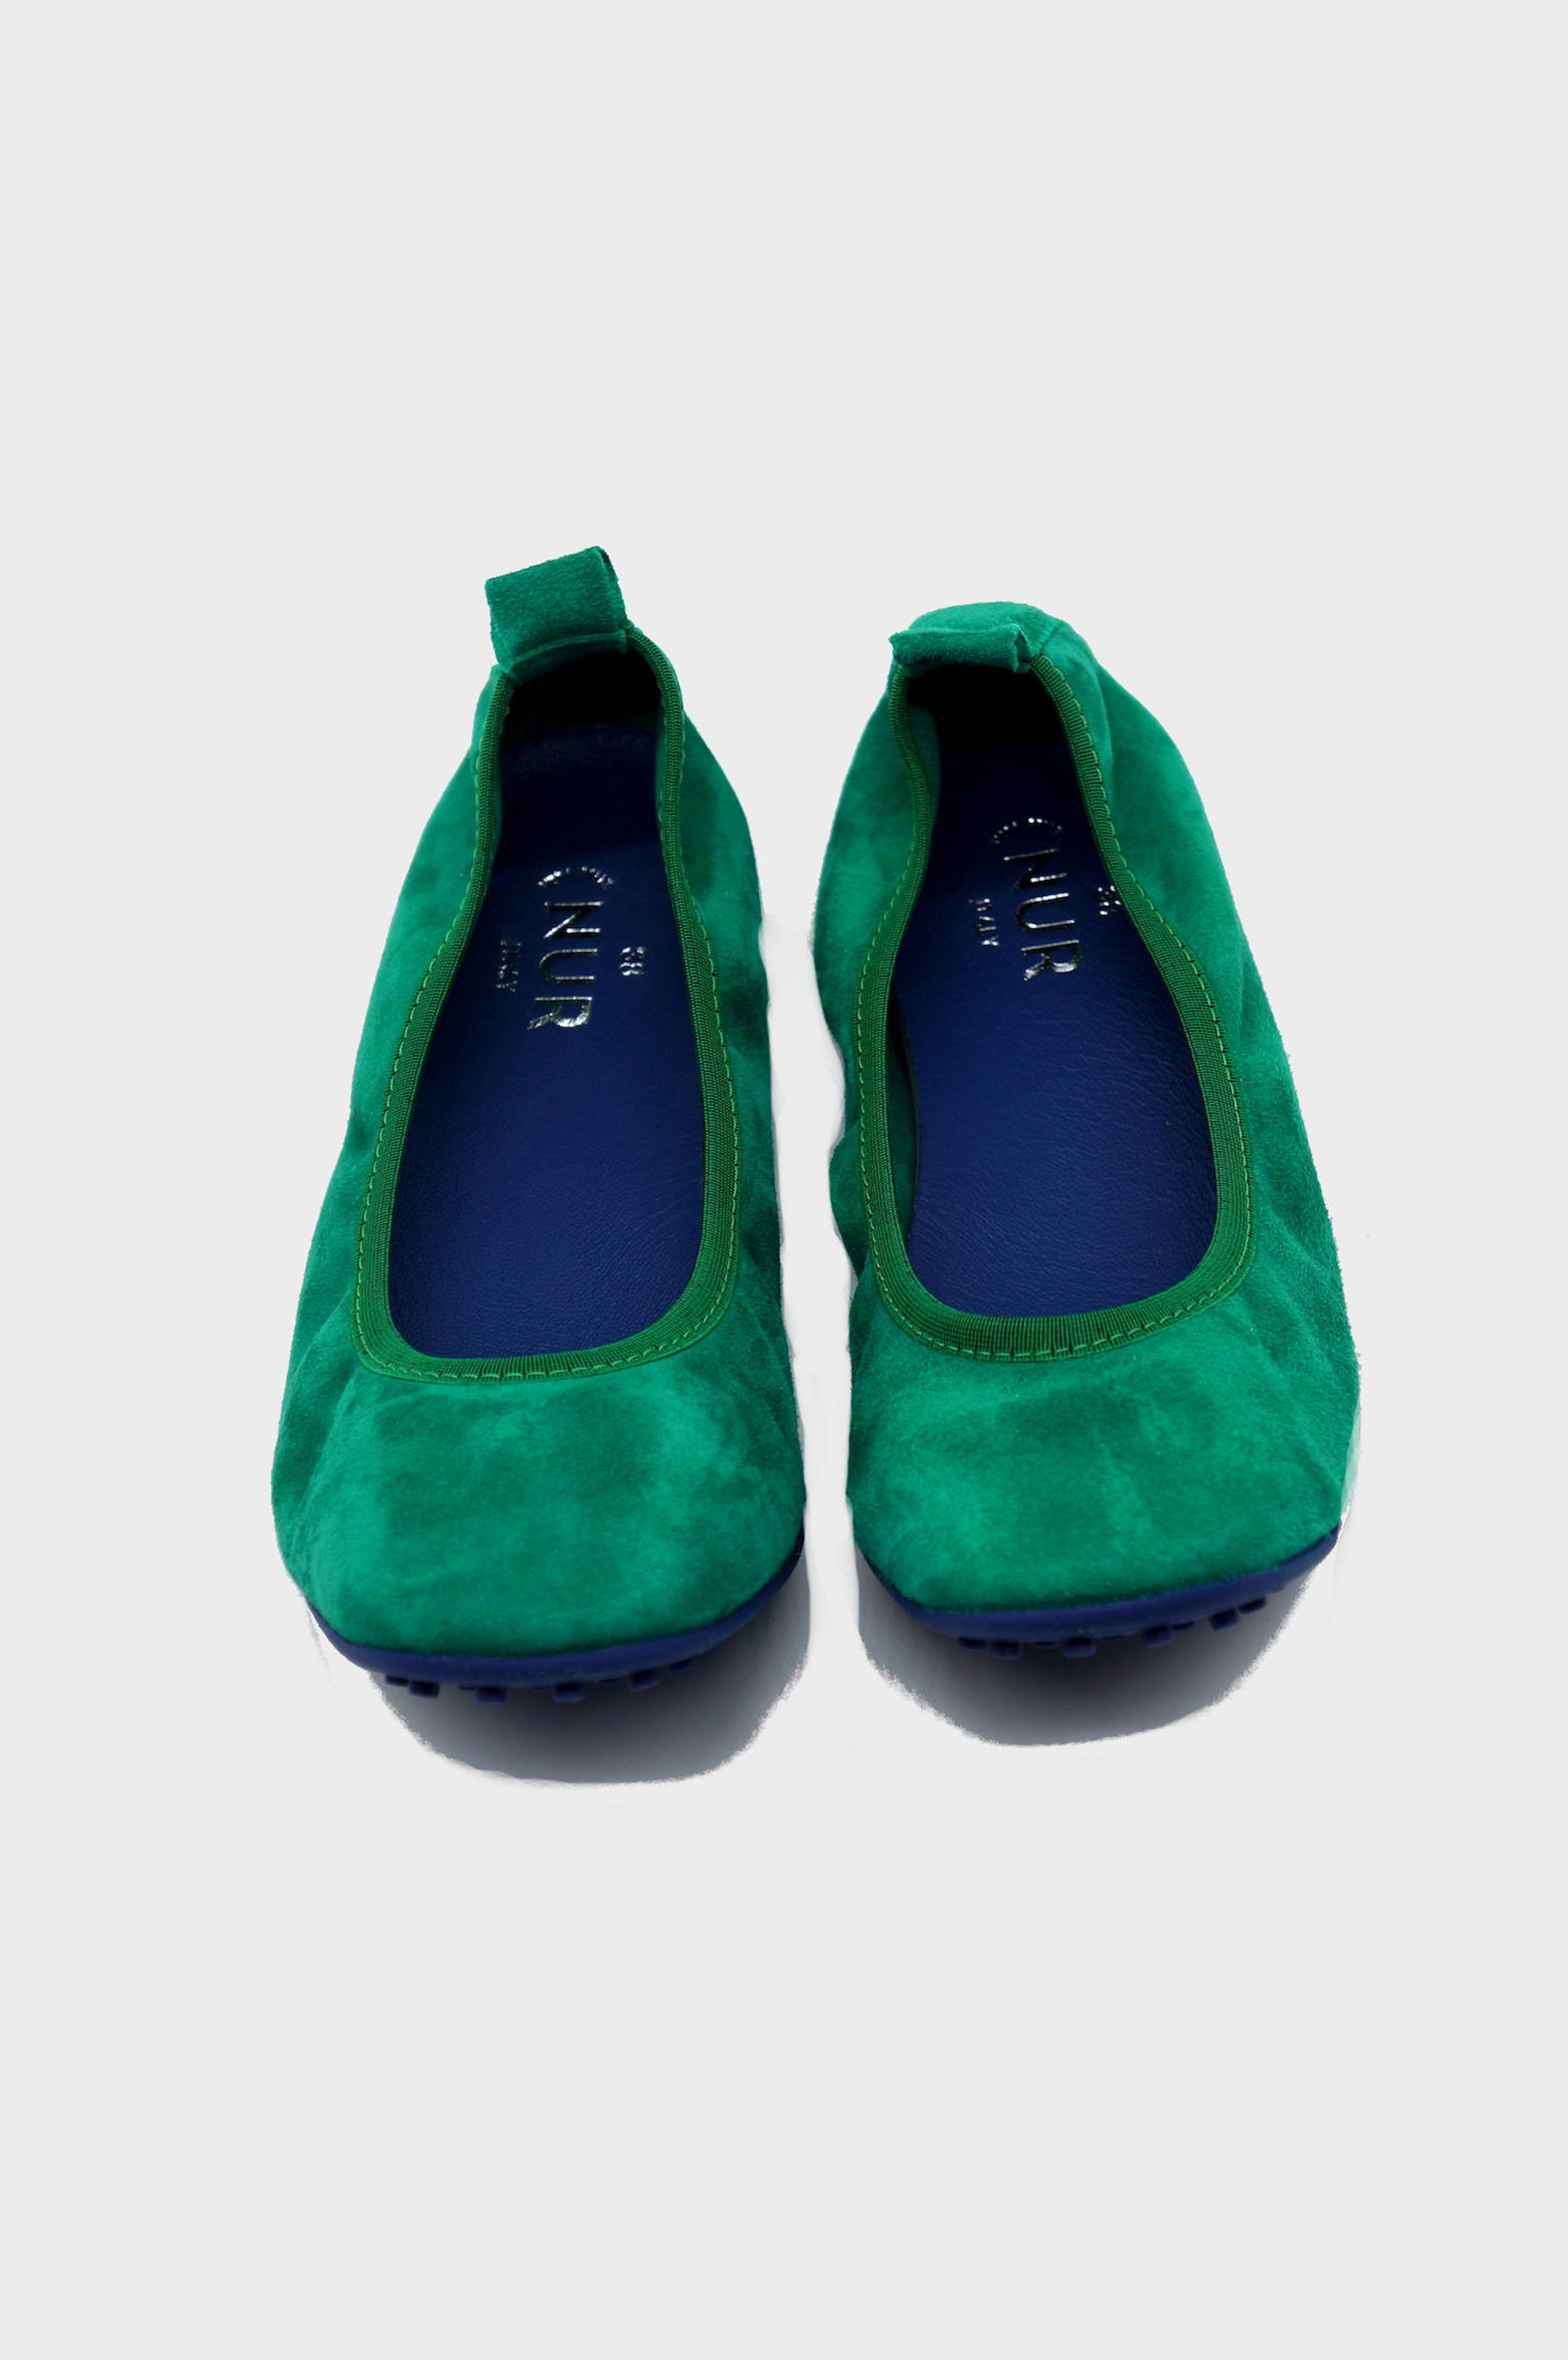 NUR ITALY Valentina Suede Foldable Flats, color, EMERALD GREEN  #color_torino emerald